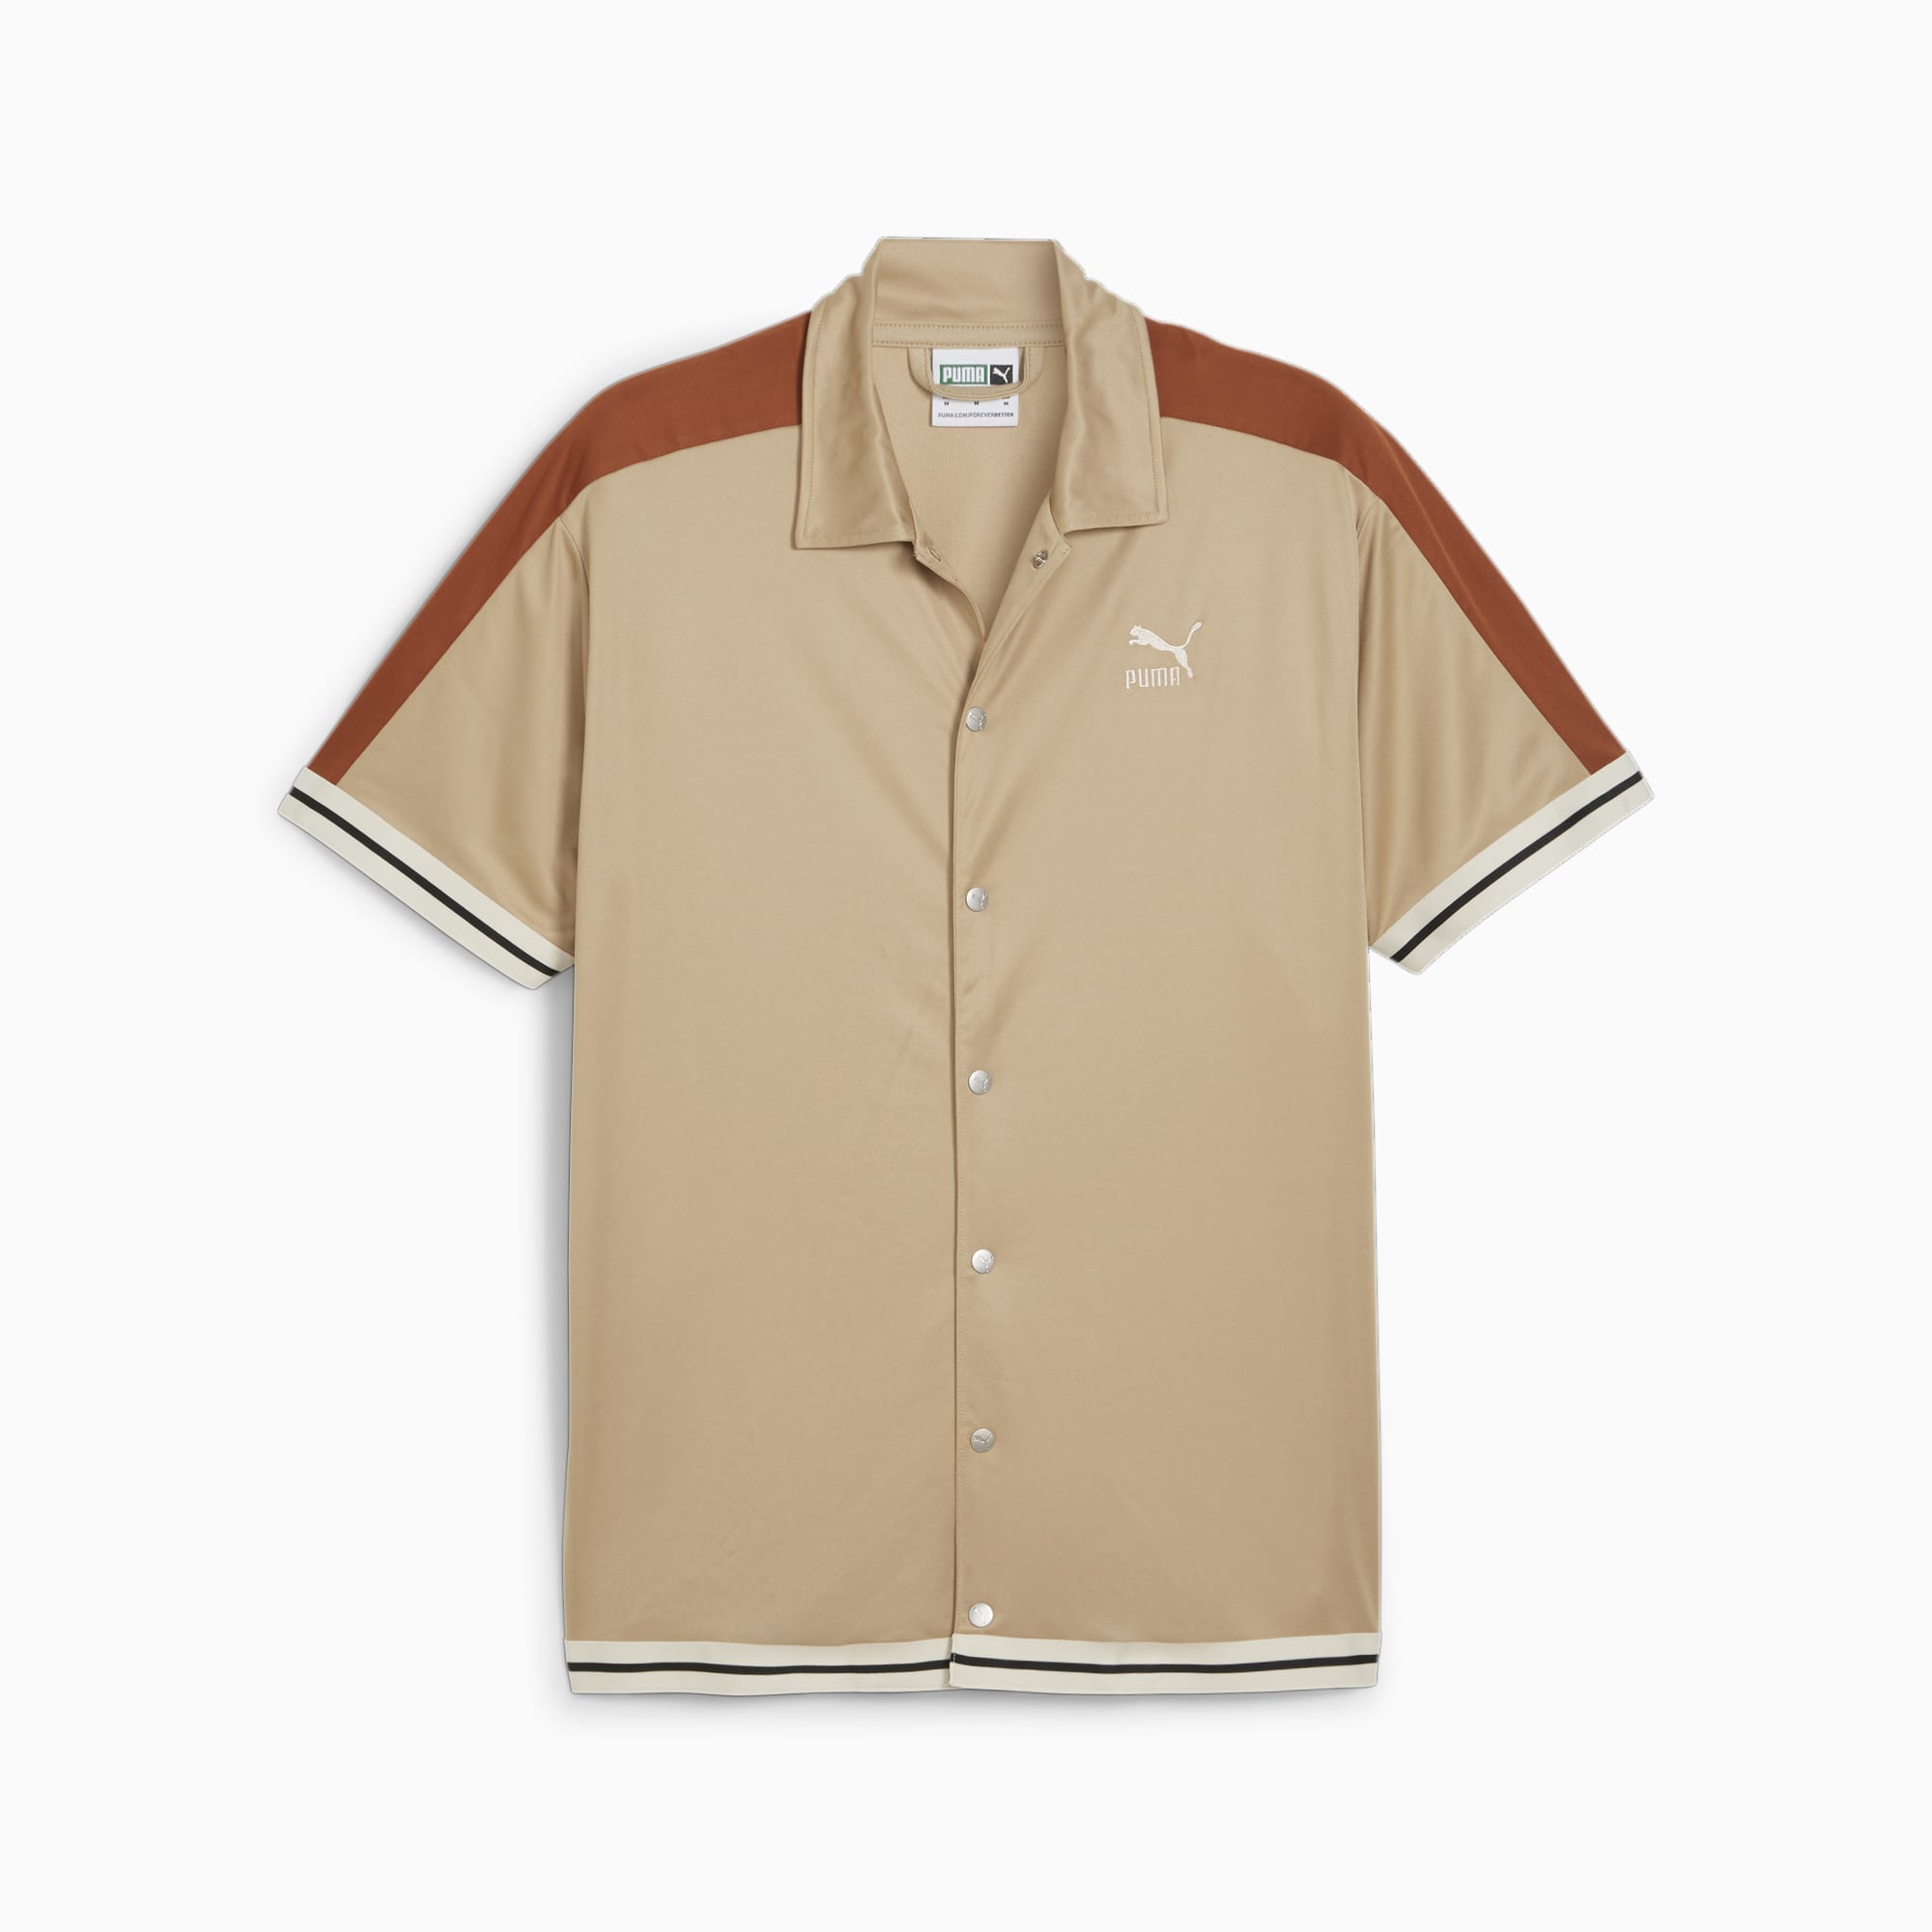 PUMA T7 Men's Shooting Shirt, Prairie Tan, Size XXL, Clothing